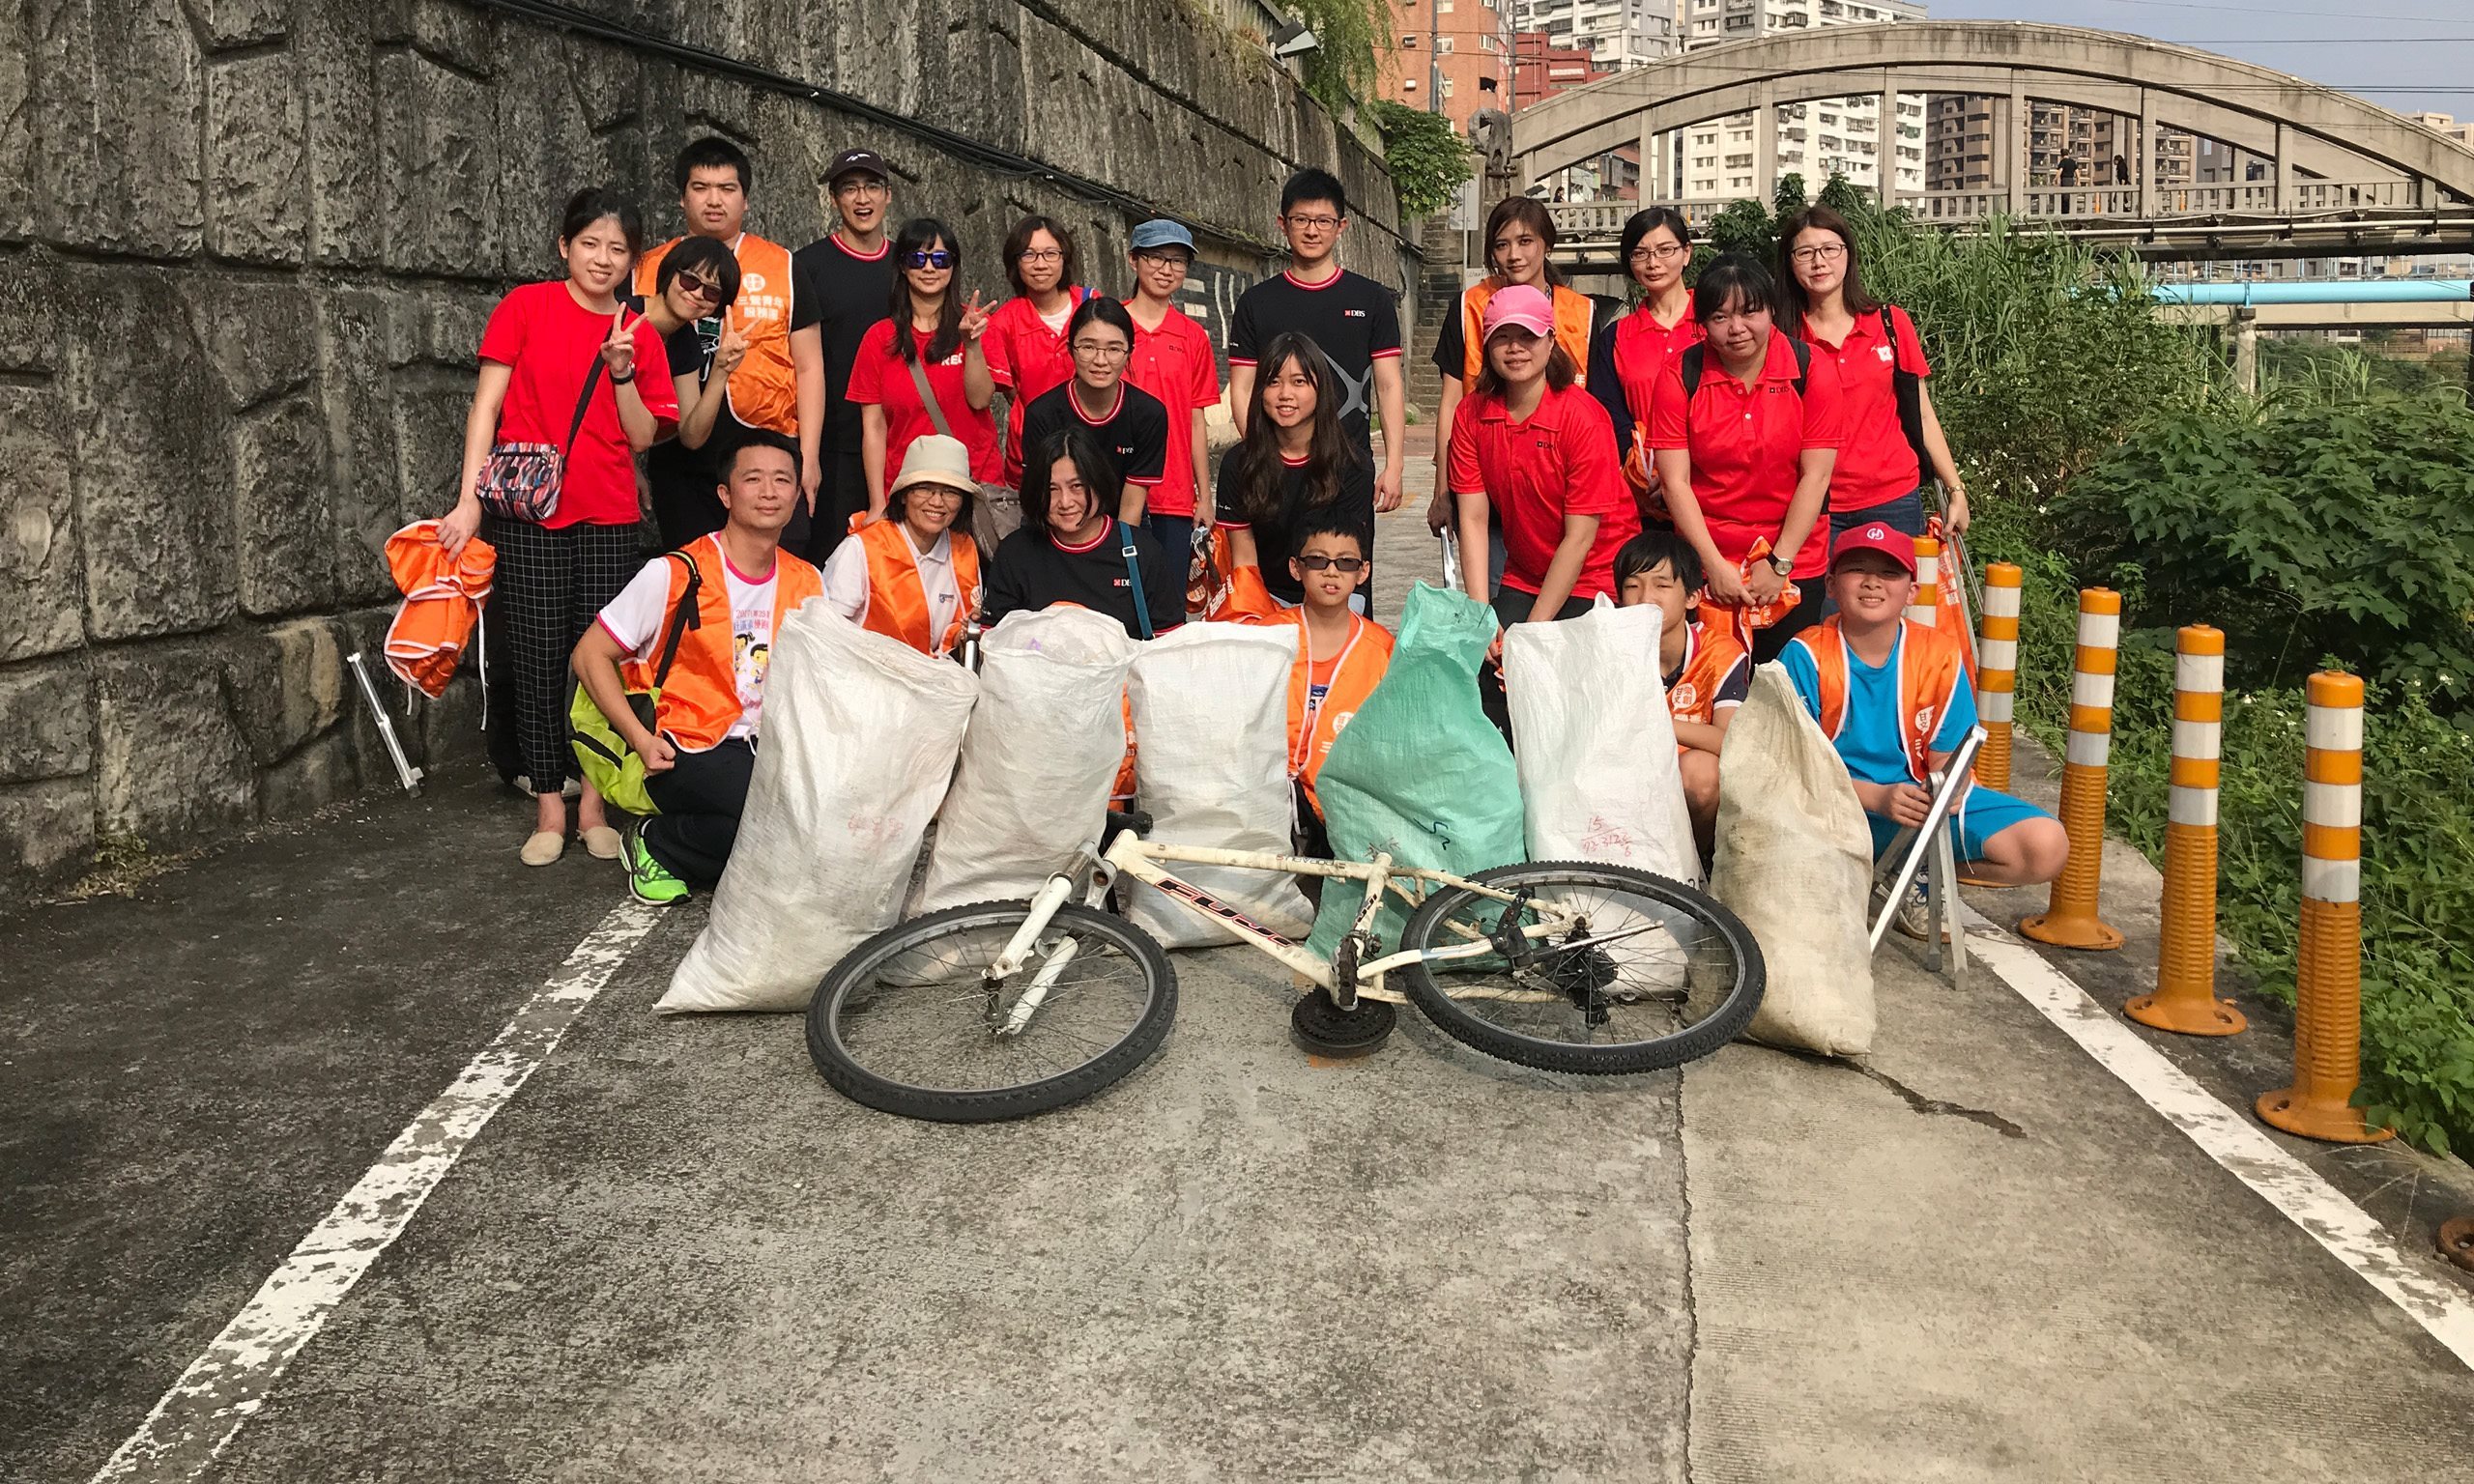 2018/11/11 River Clean-up Operation in Taiwan, Taipei Sanxia